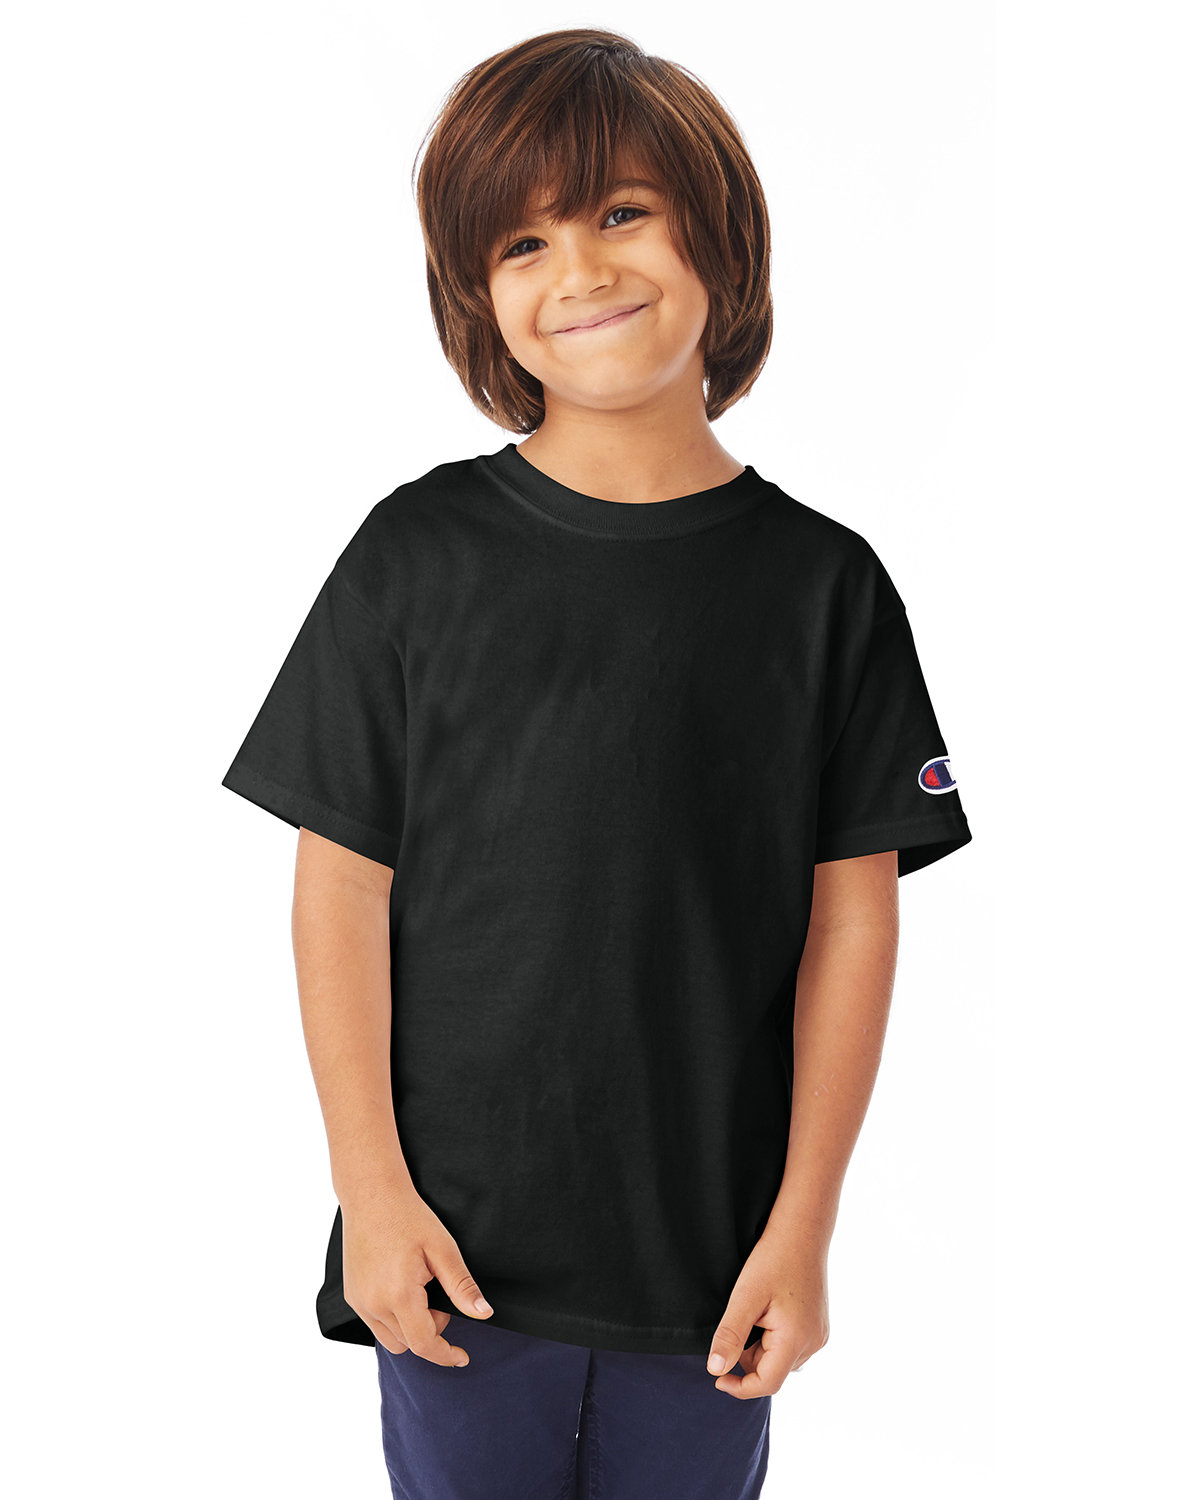 Champion Youth 6.1 oz. Short-Sleeve T-Shirt black 